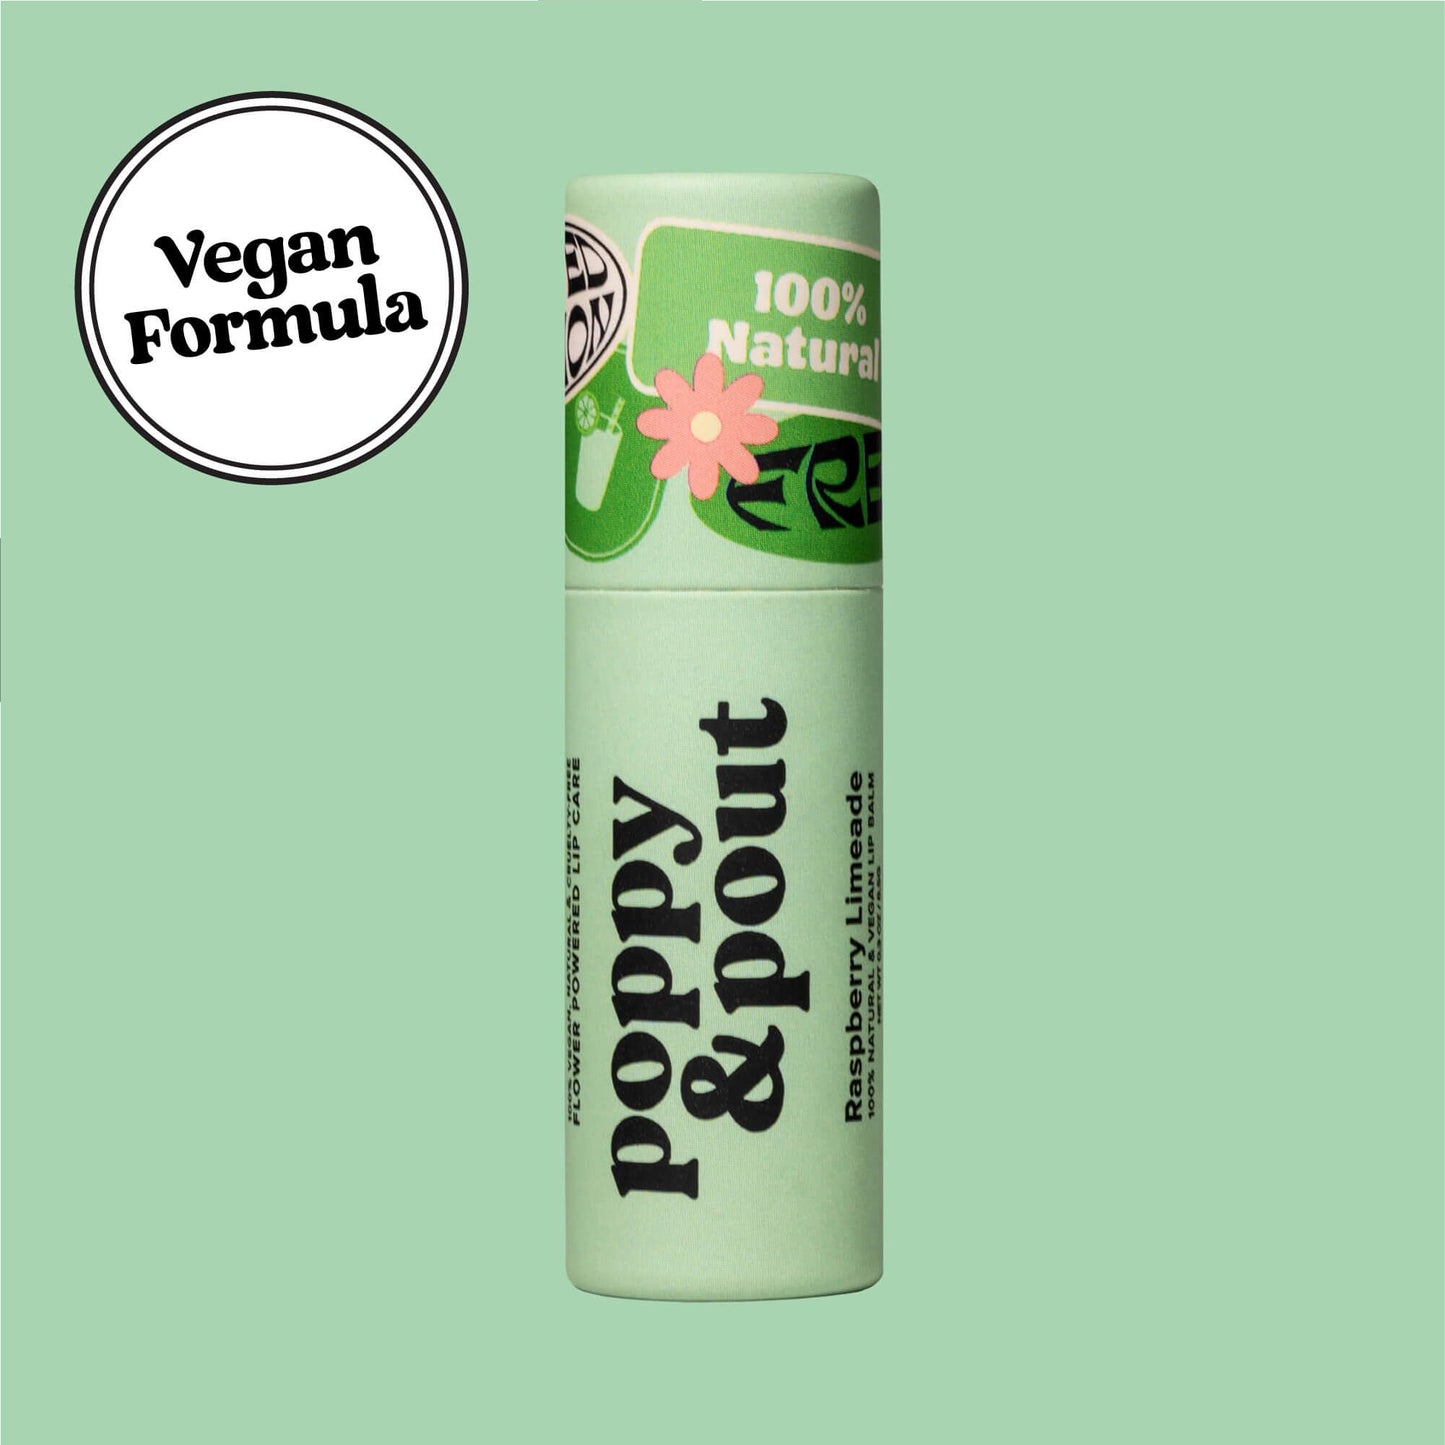 Sunshine Vibes Poppy & Pout Raspberry Limeade Lip Balm (LIMITED EDITION) - Now Vegan!